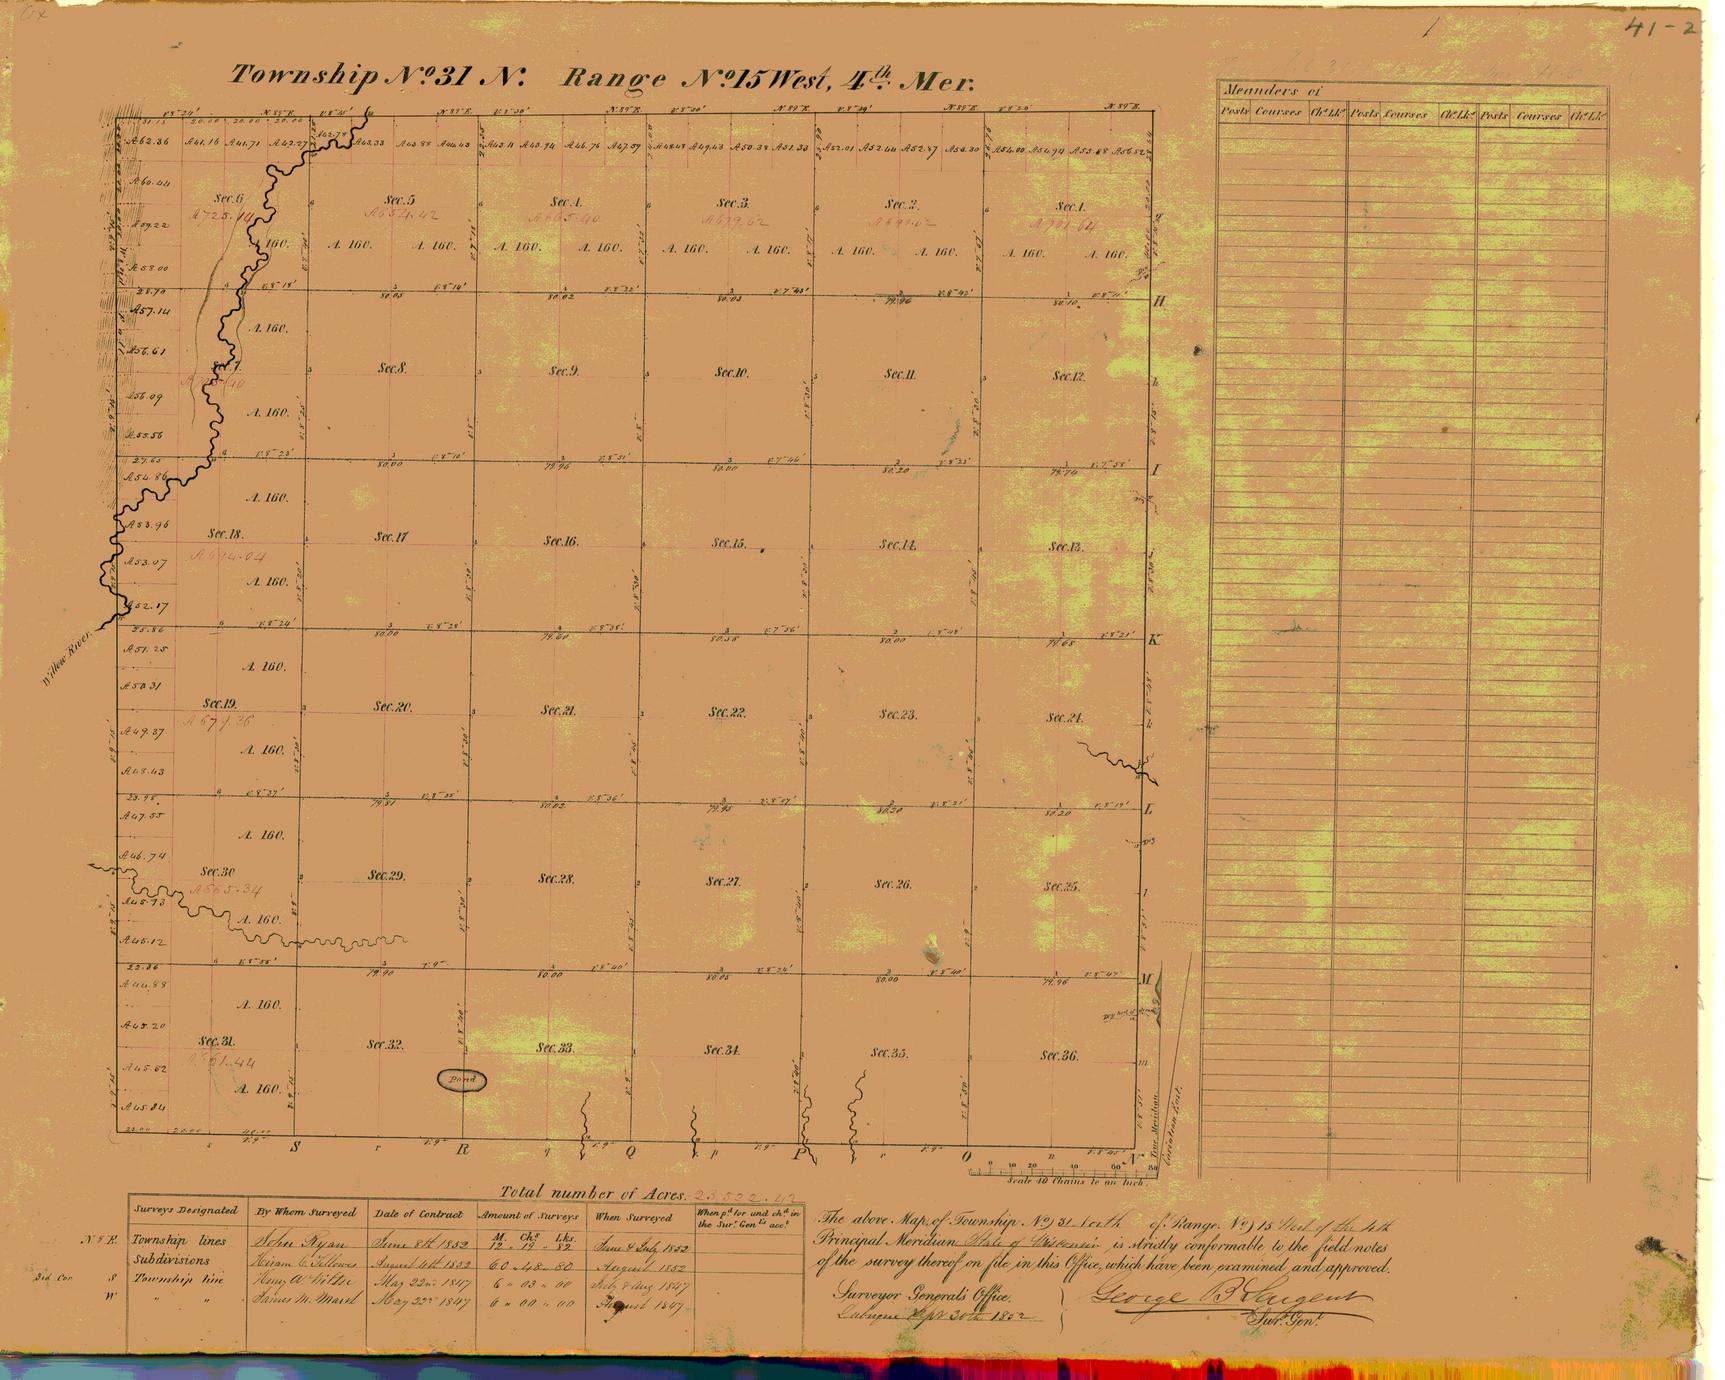 [Public Land Survey System map: Wisconsin Township 31 North, Range 15 West]